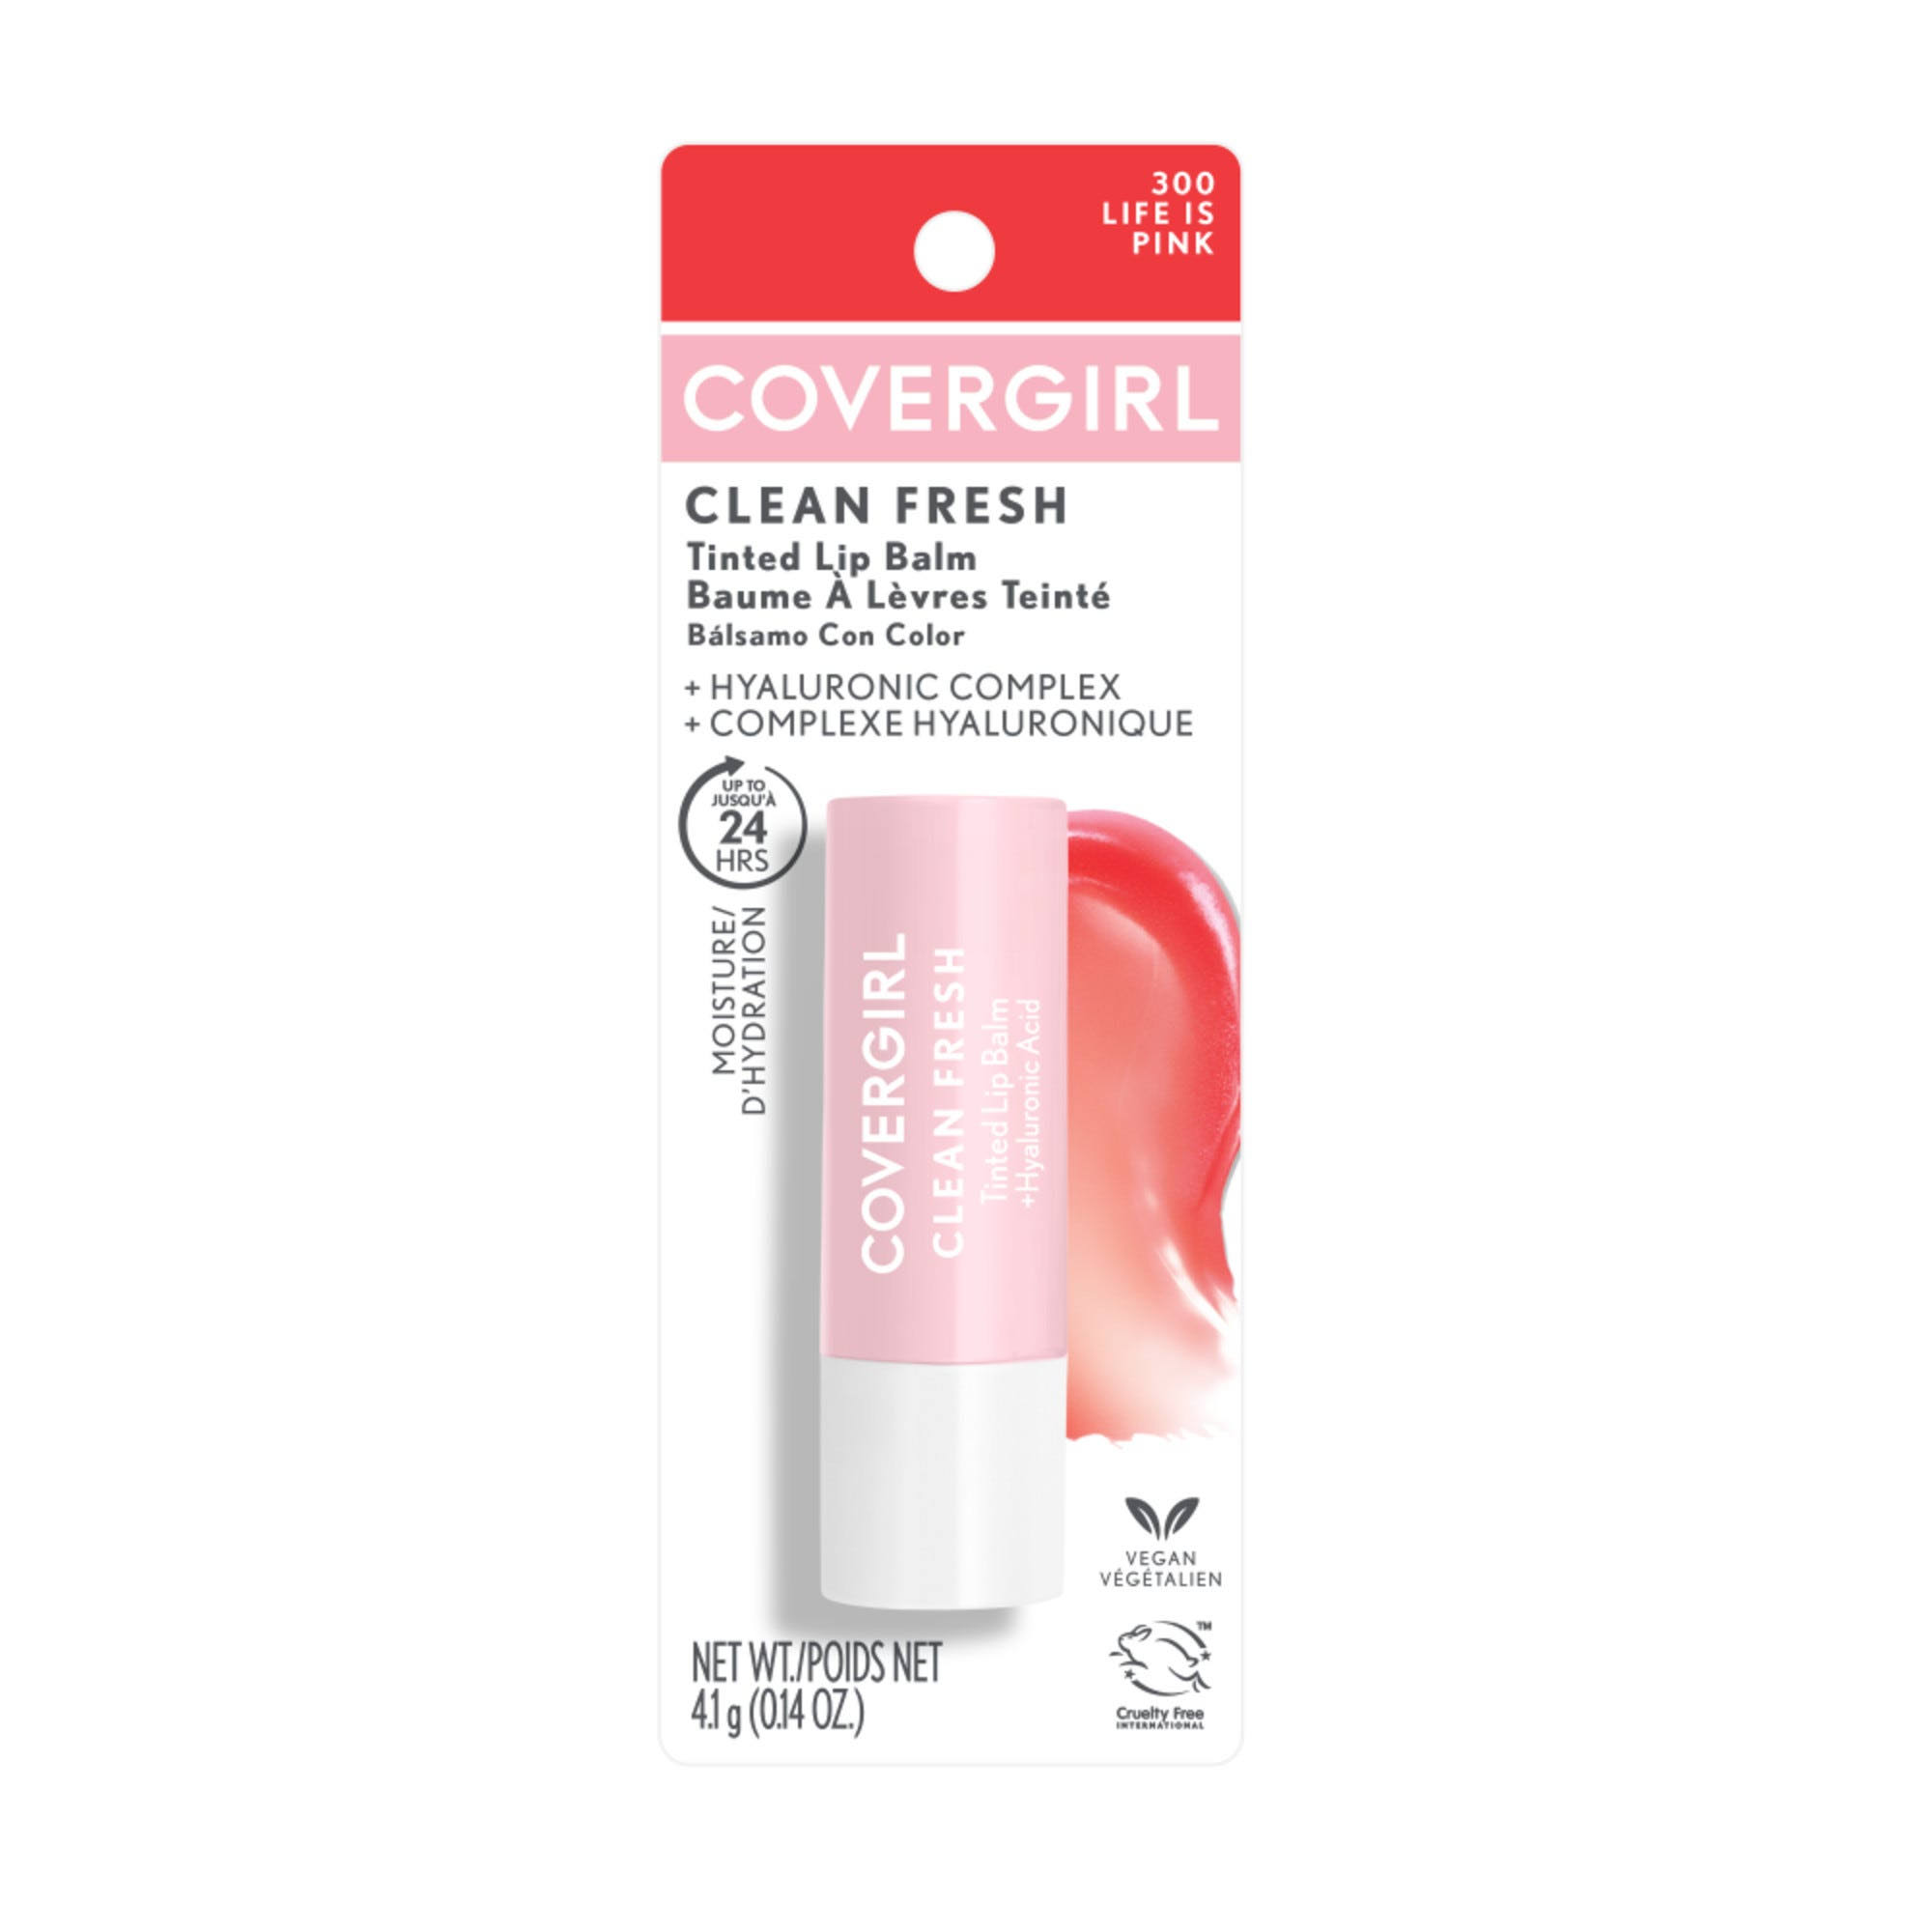 Covergirl clean fresh lip balm, life is pink 300, 0.05 oz